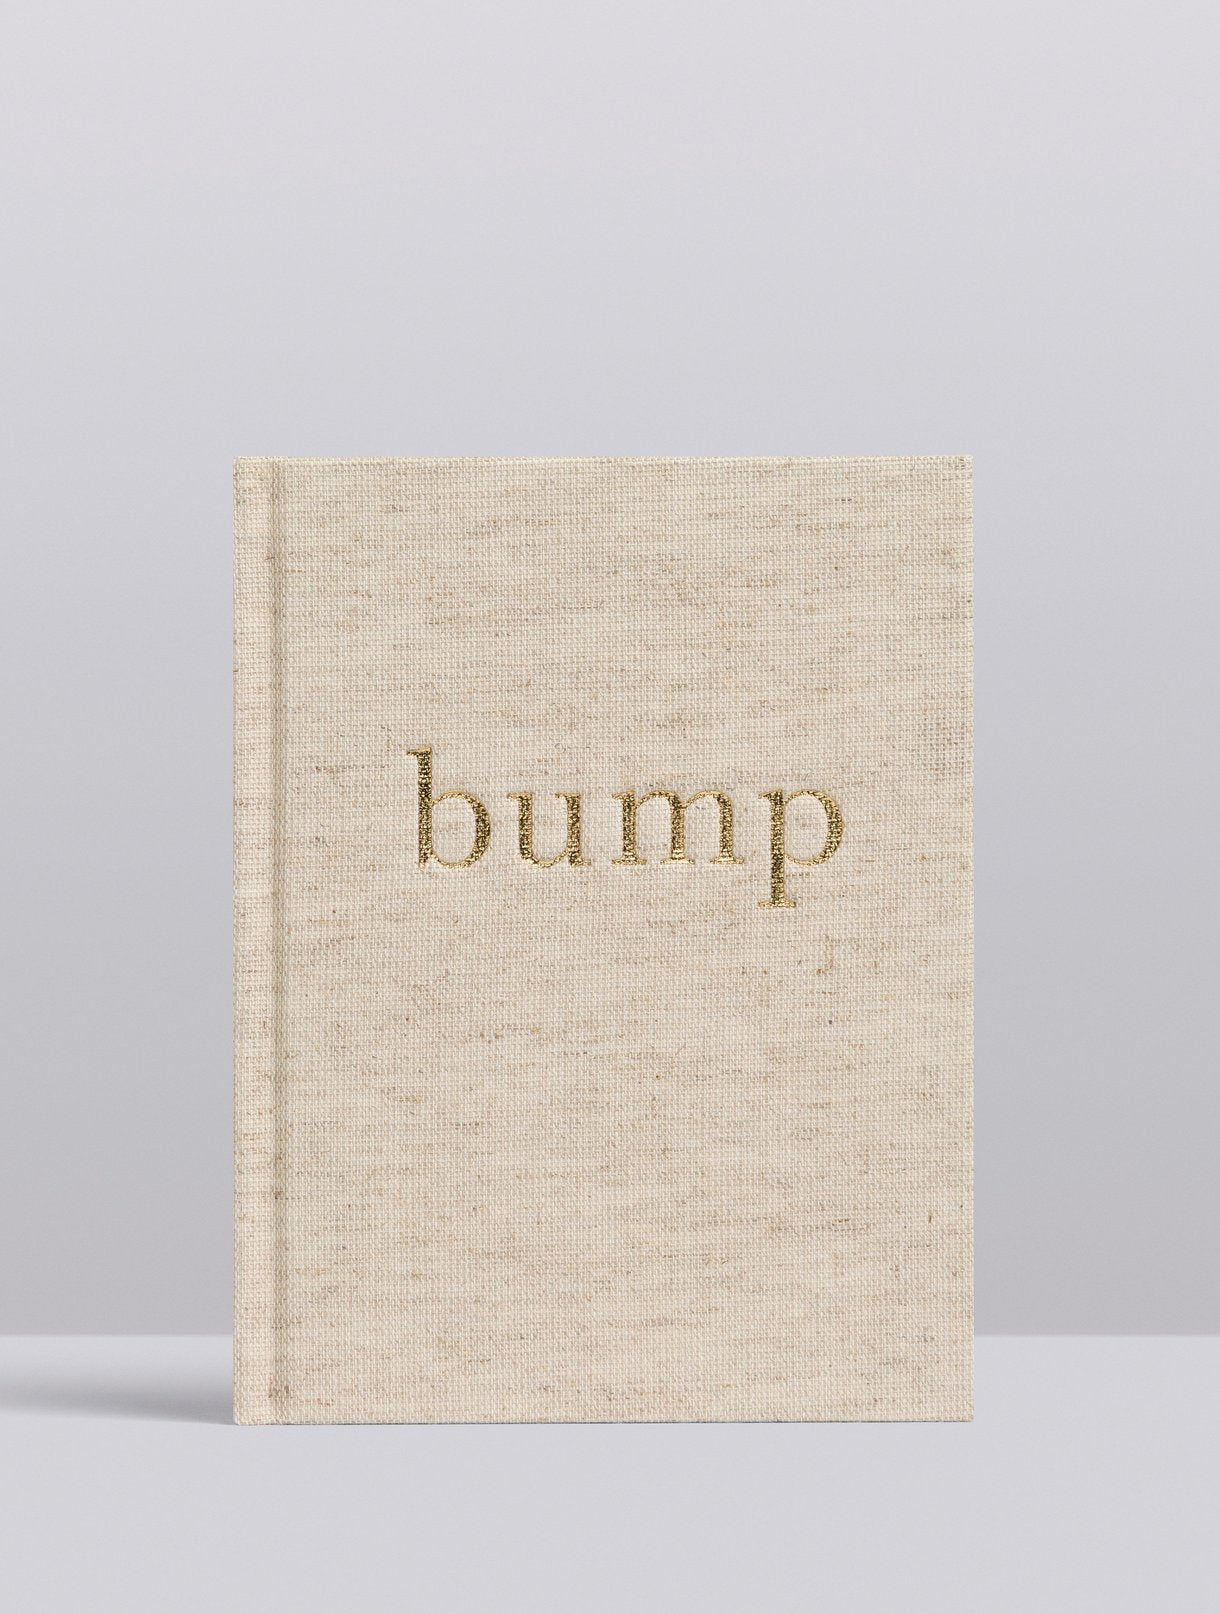 Write to Me - Bump: A Pregnancy Story